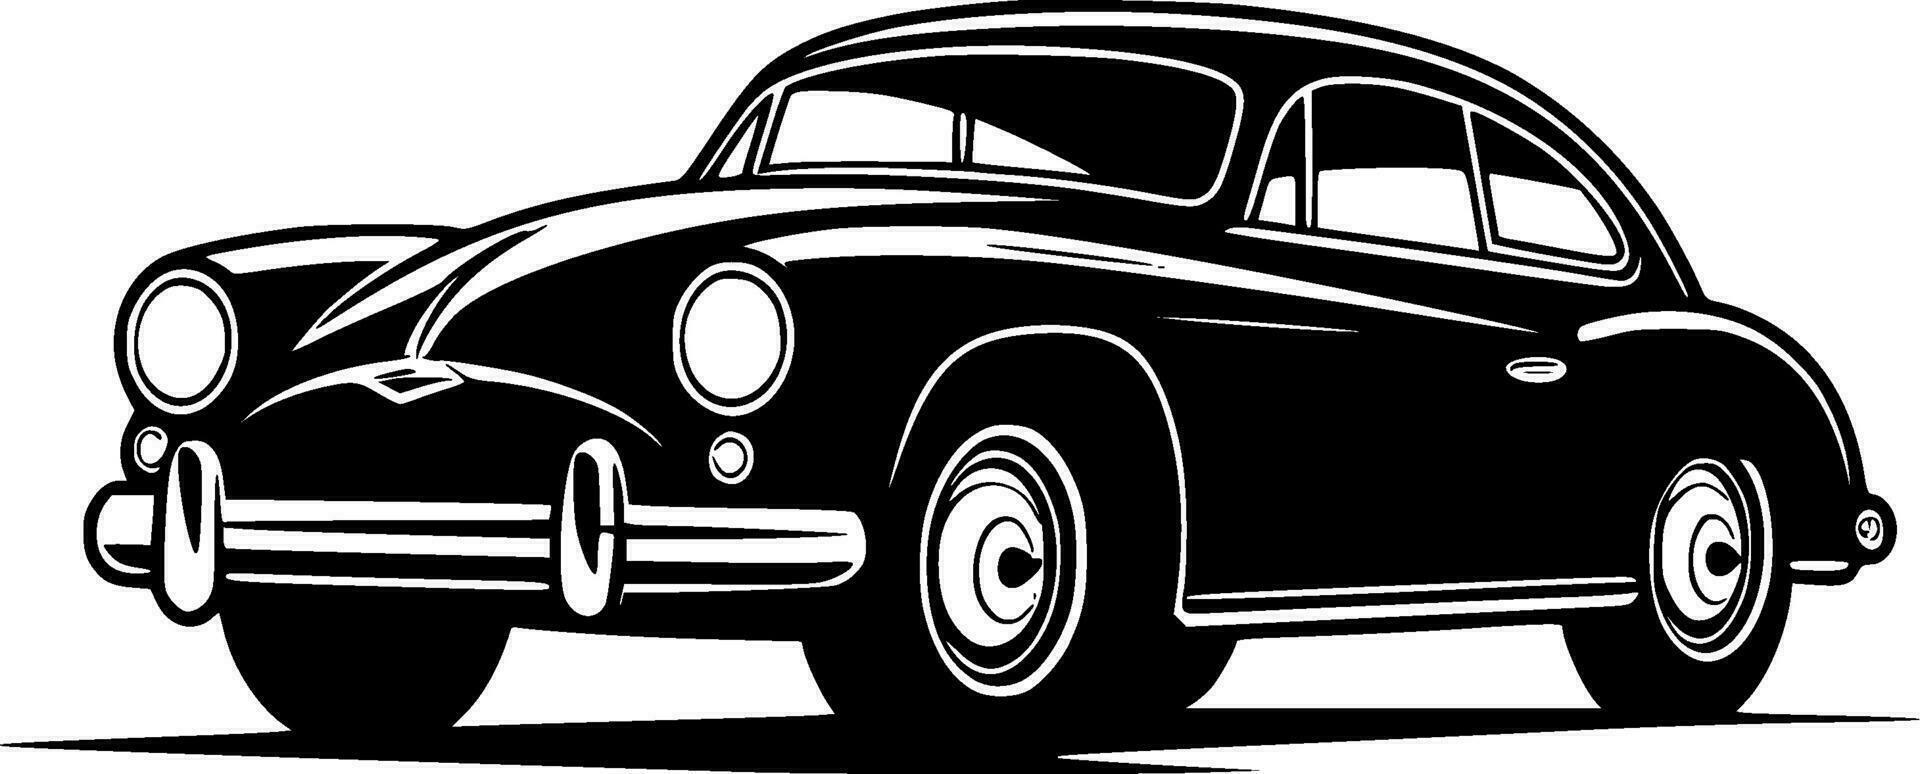 Car, Black and White Vector illustration